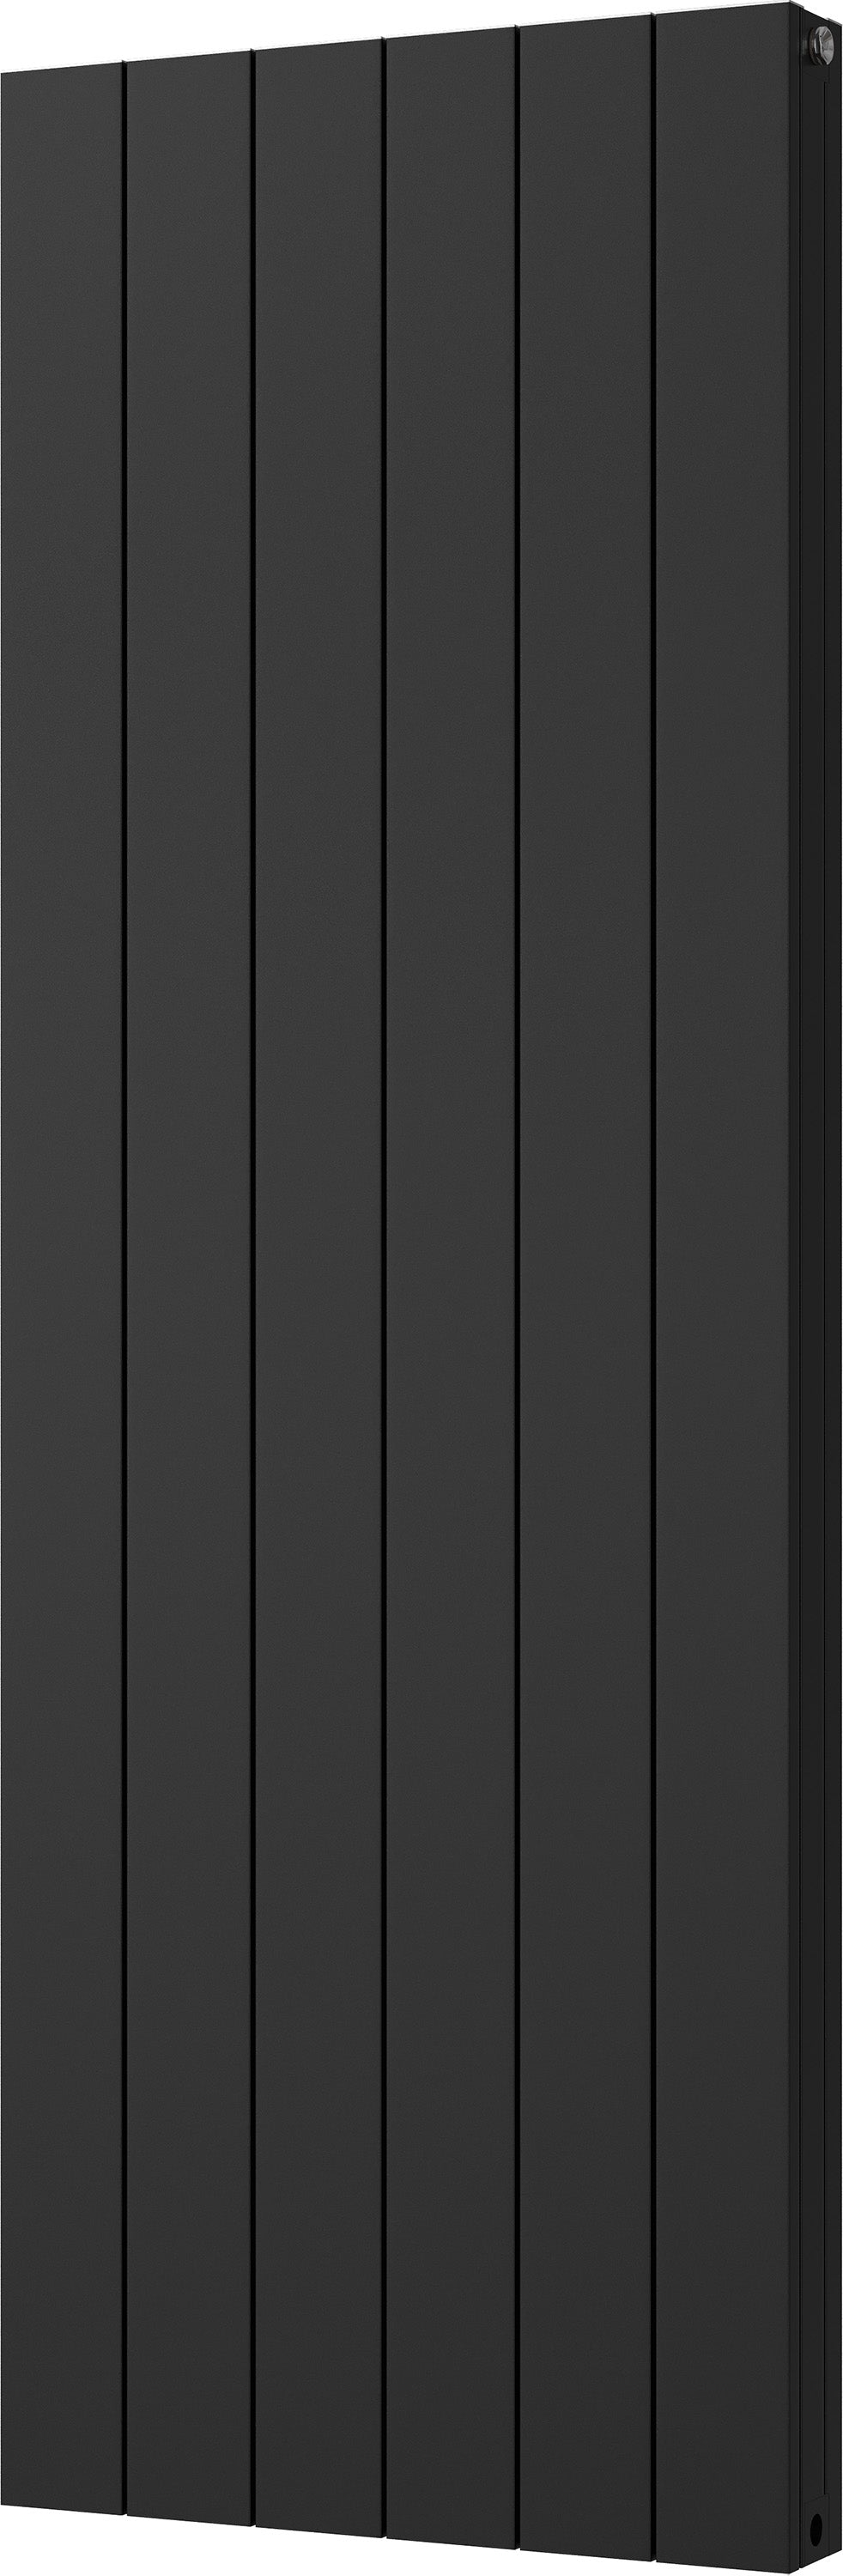 Thetford - Black Vertical Radiator H1600mm x W560mm Smooth